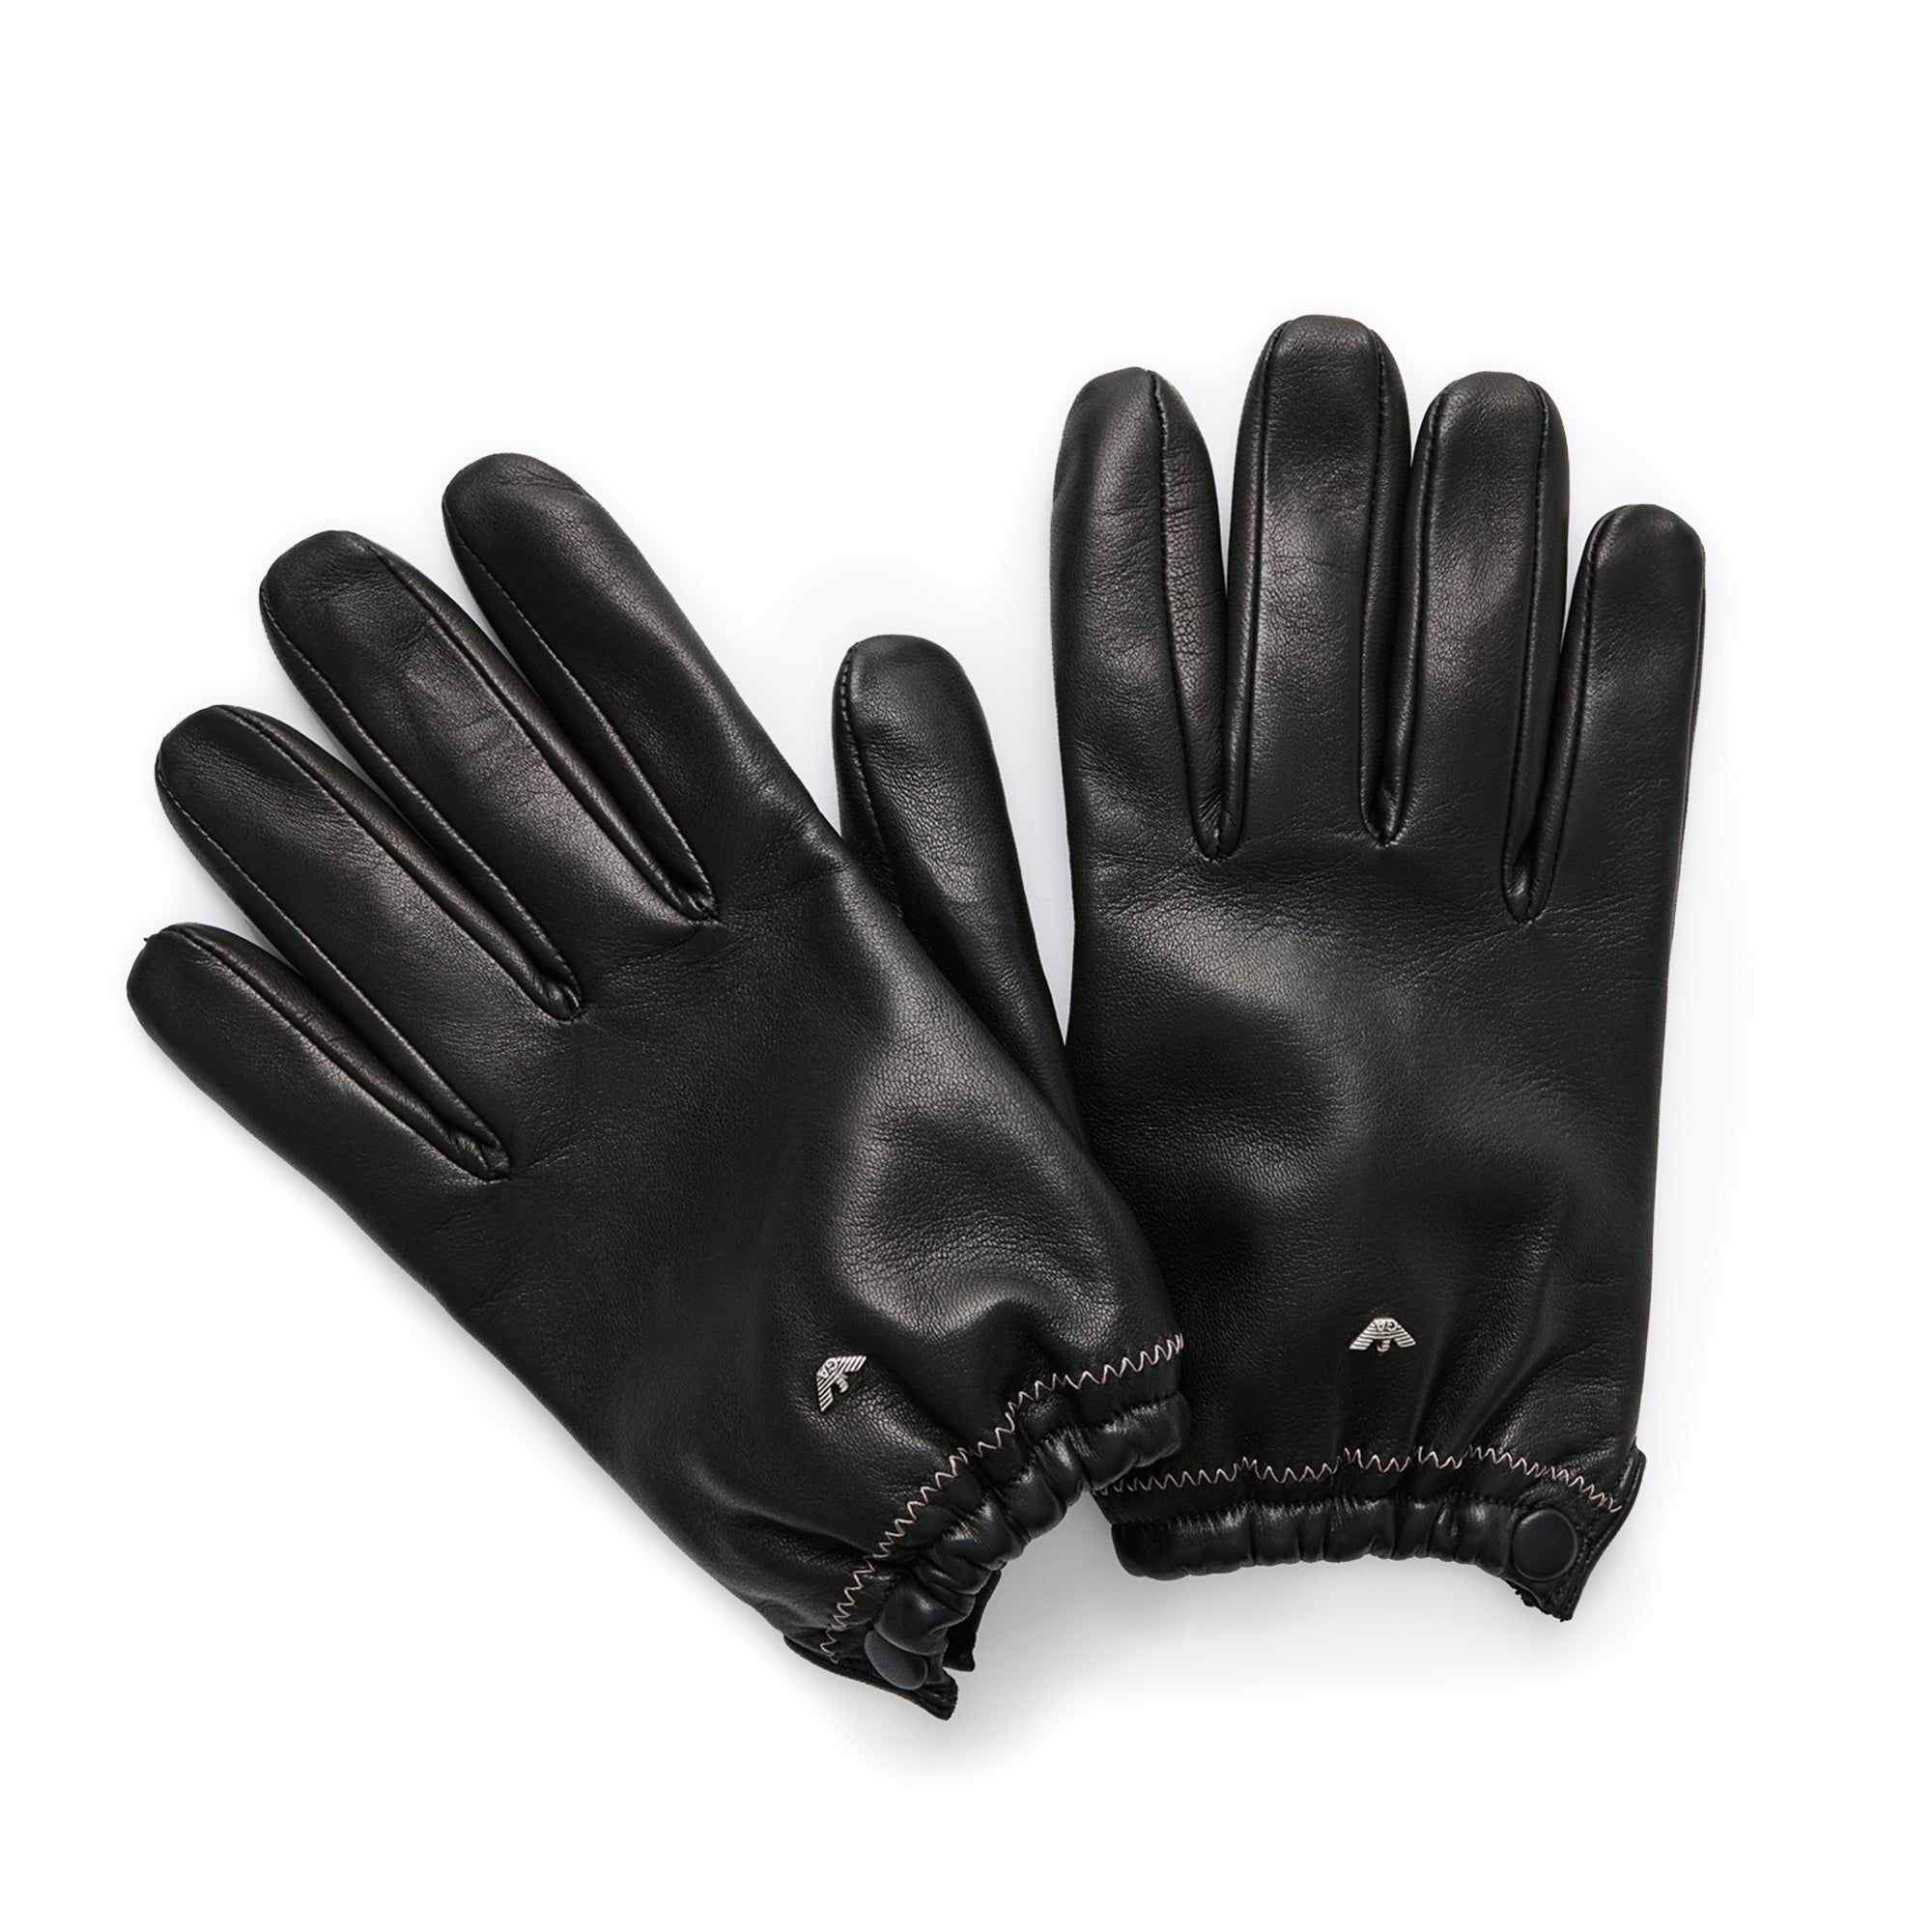 Our Legacy Work Shop - Armani Moto Gloves - (Liquirizia Leather) view 2